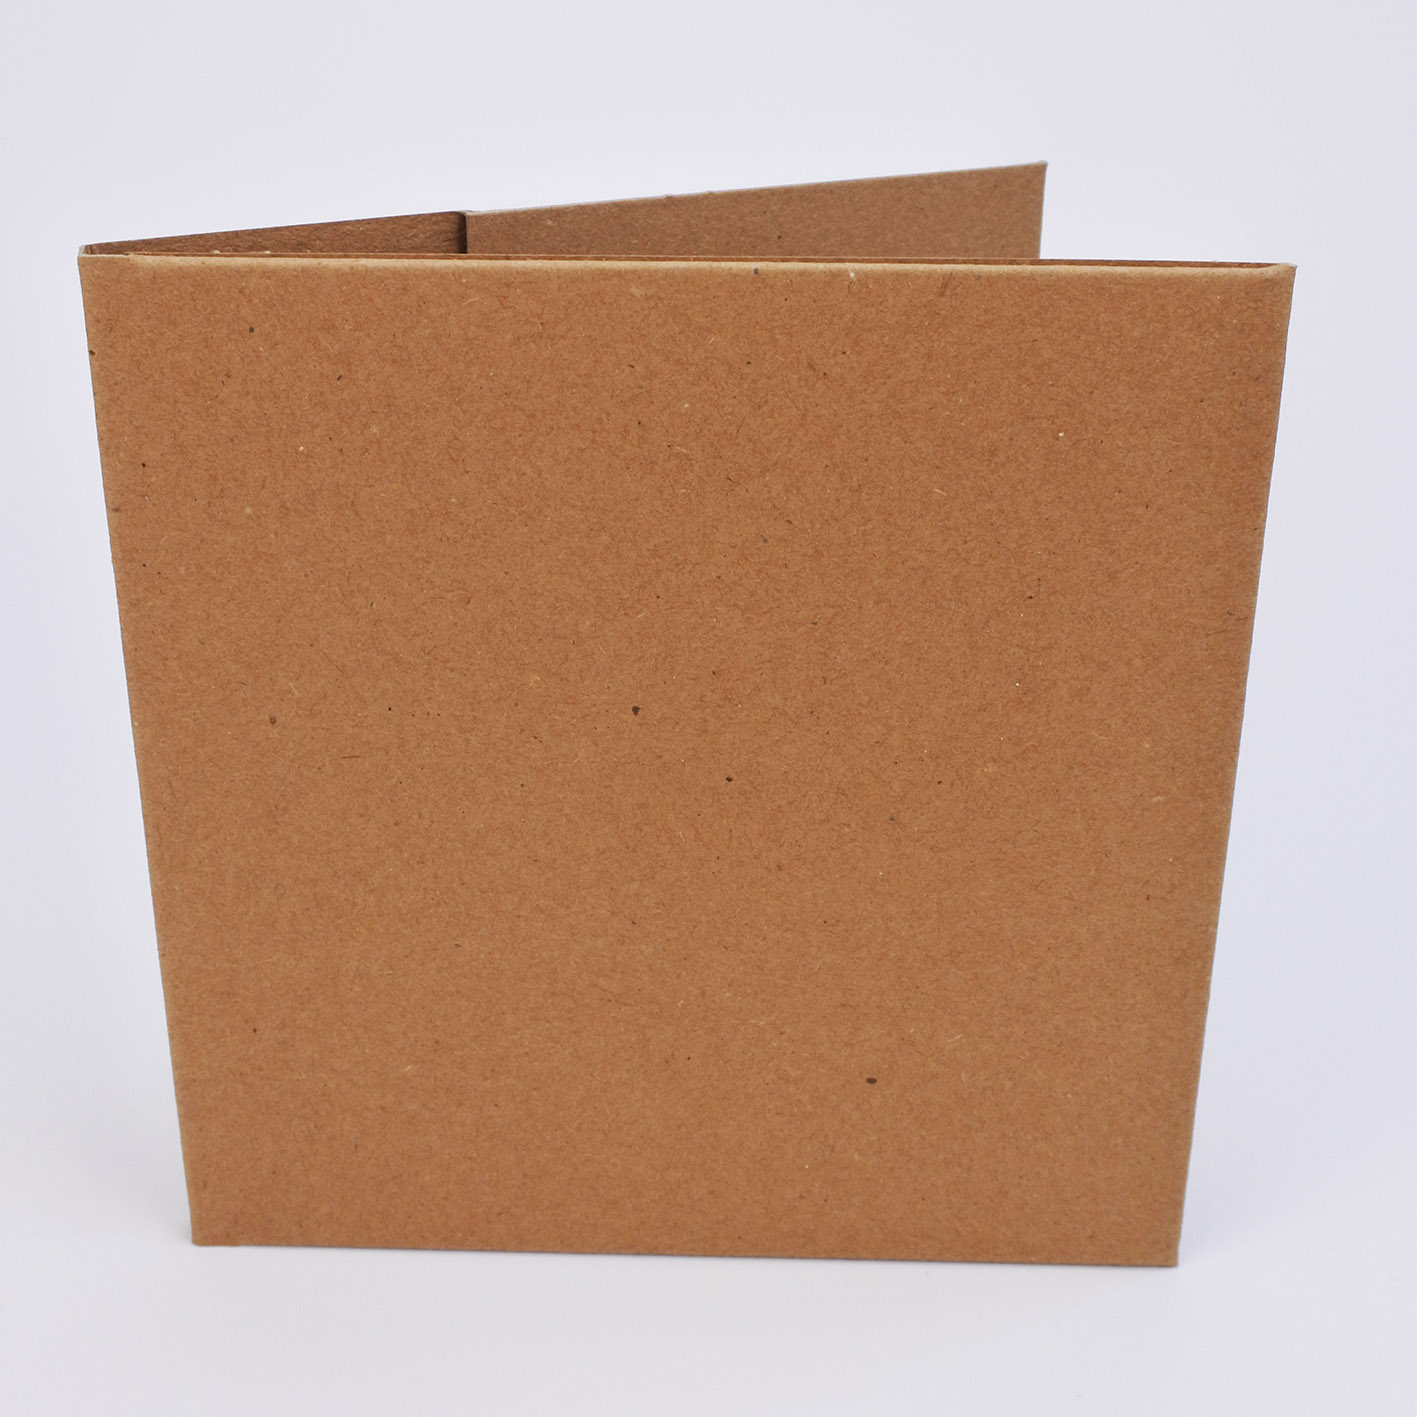 Pochette dos carton brune - Pochette carton et plastique